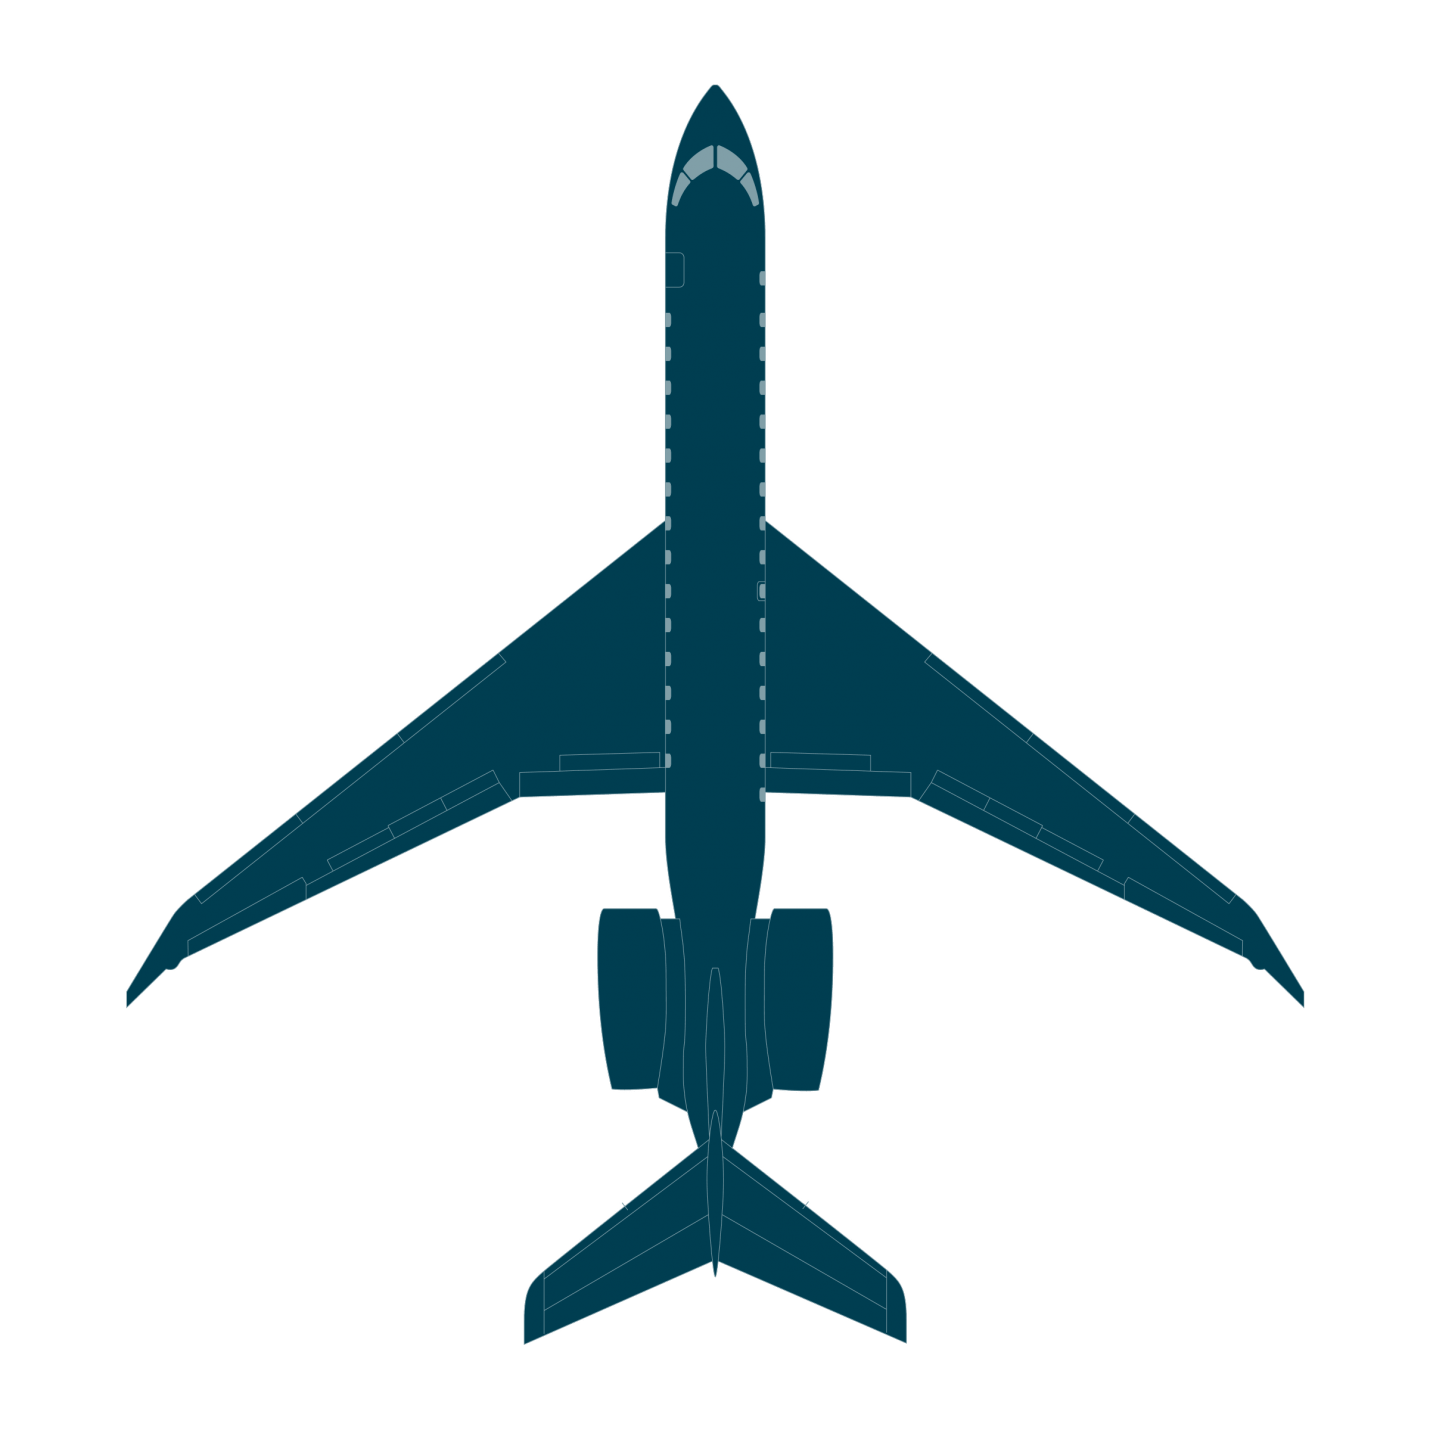 Airplane Drawing Top View at GetDrawings Free download